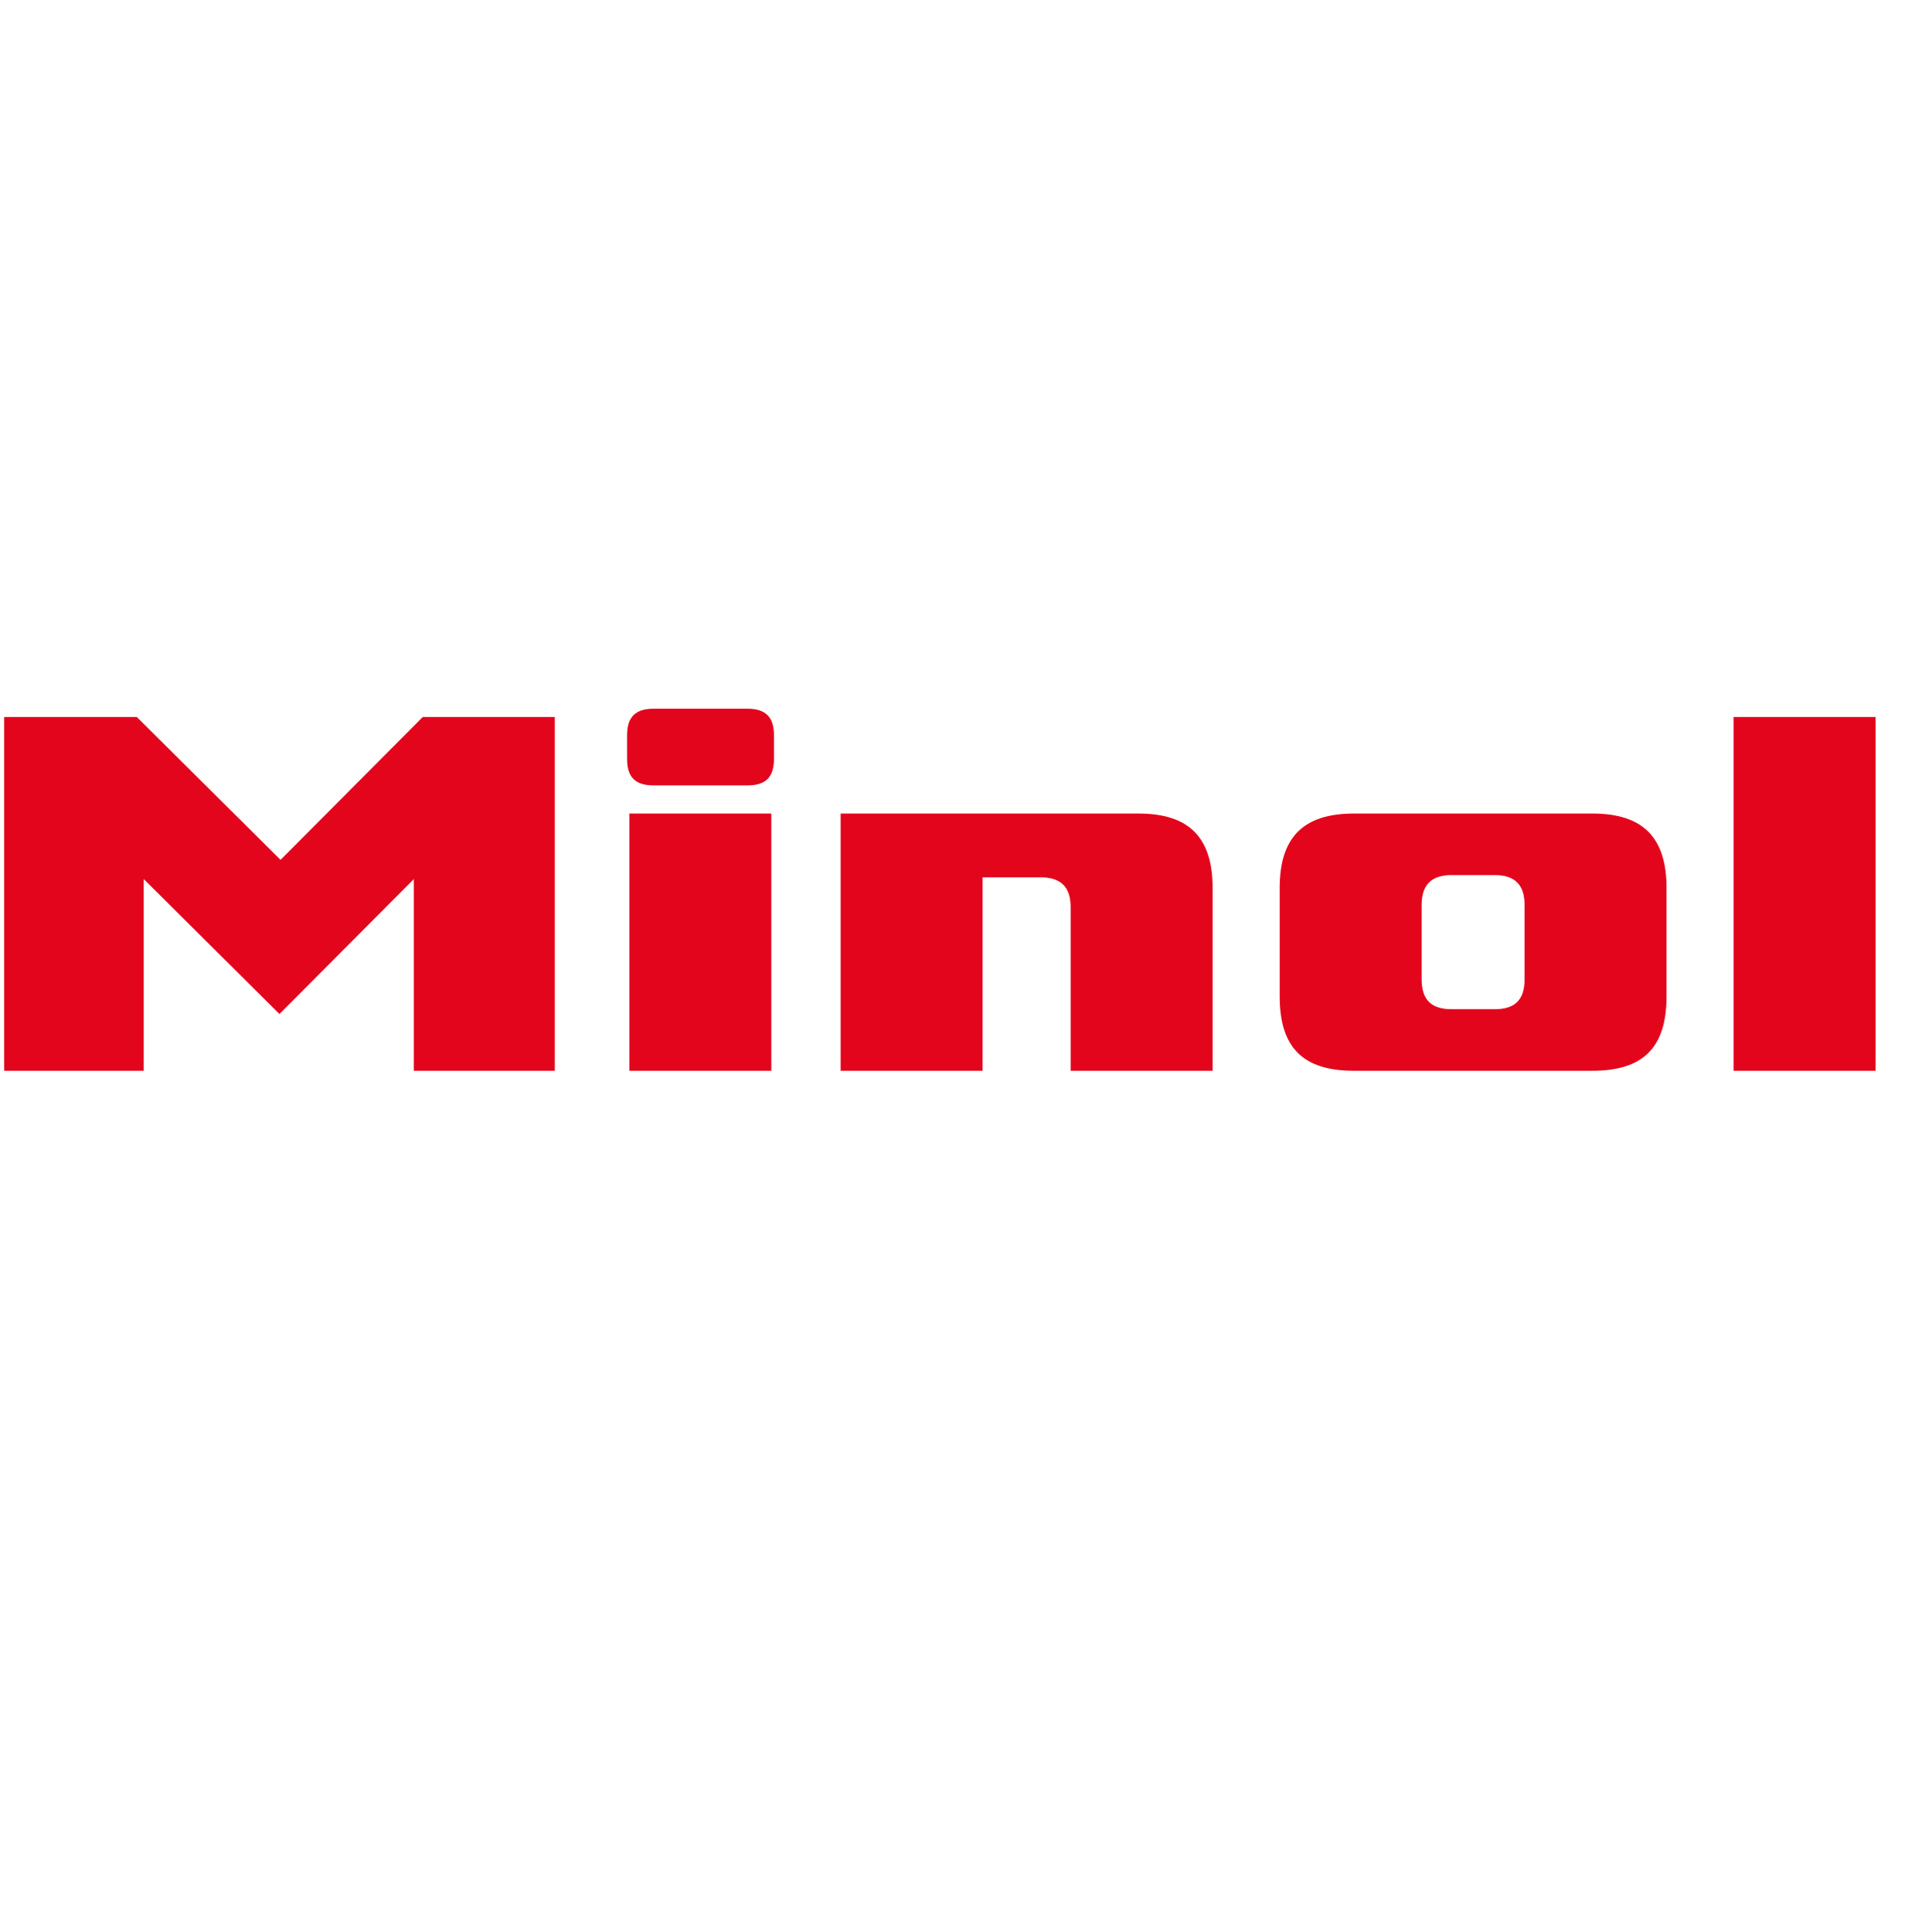 Minol Logo  Transparent Image